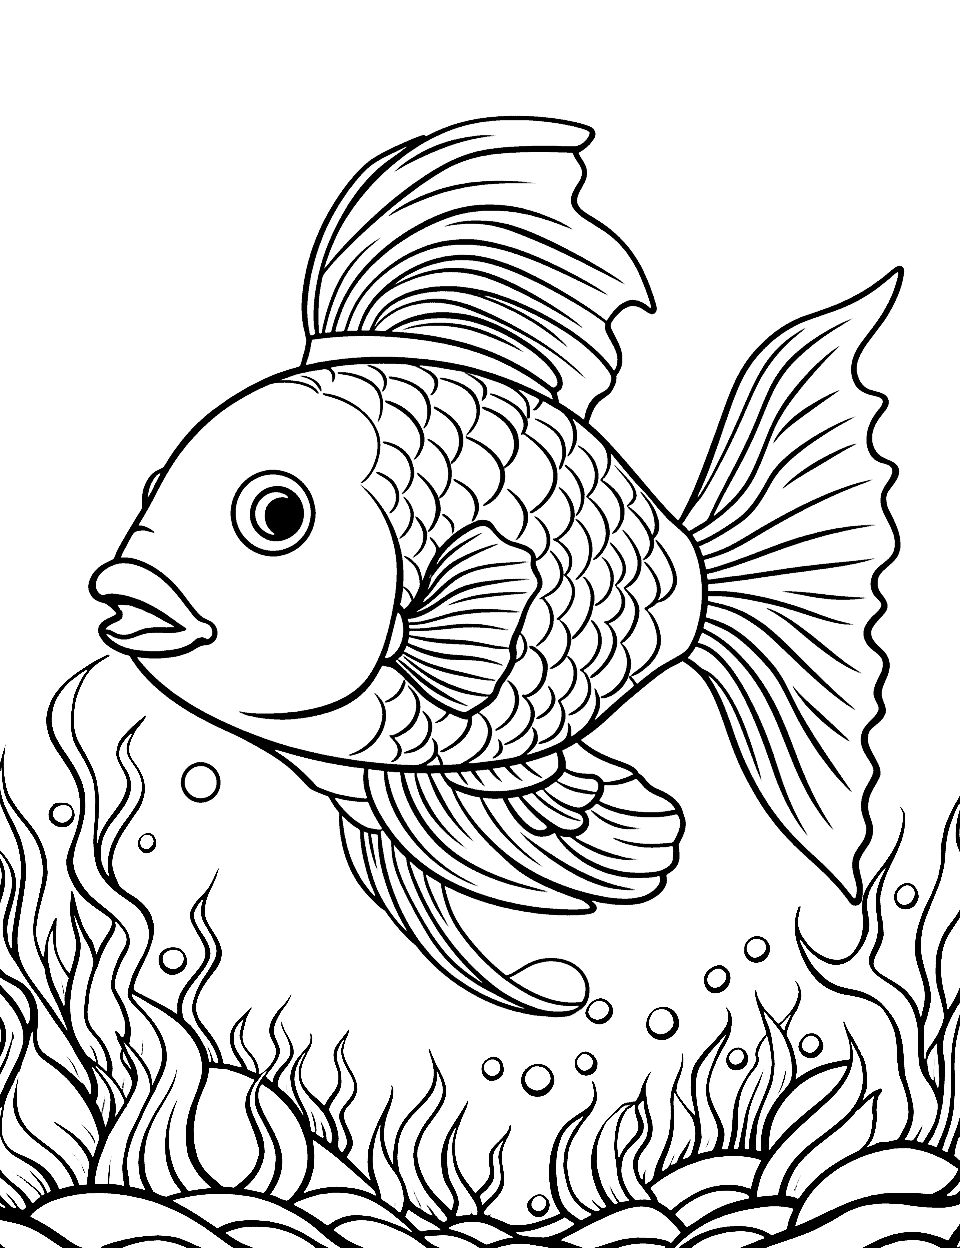 Safari Fish Adventure Coloring Page - An exotic fish exploring underwater.